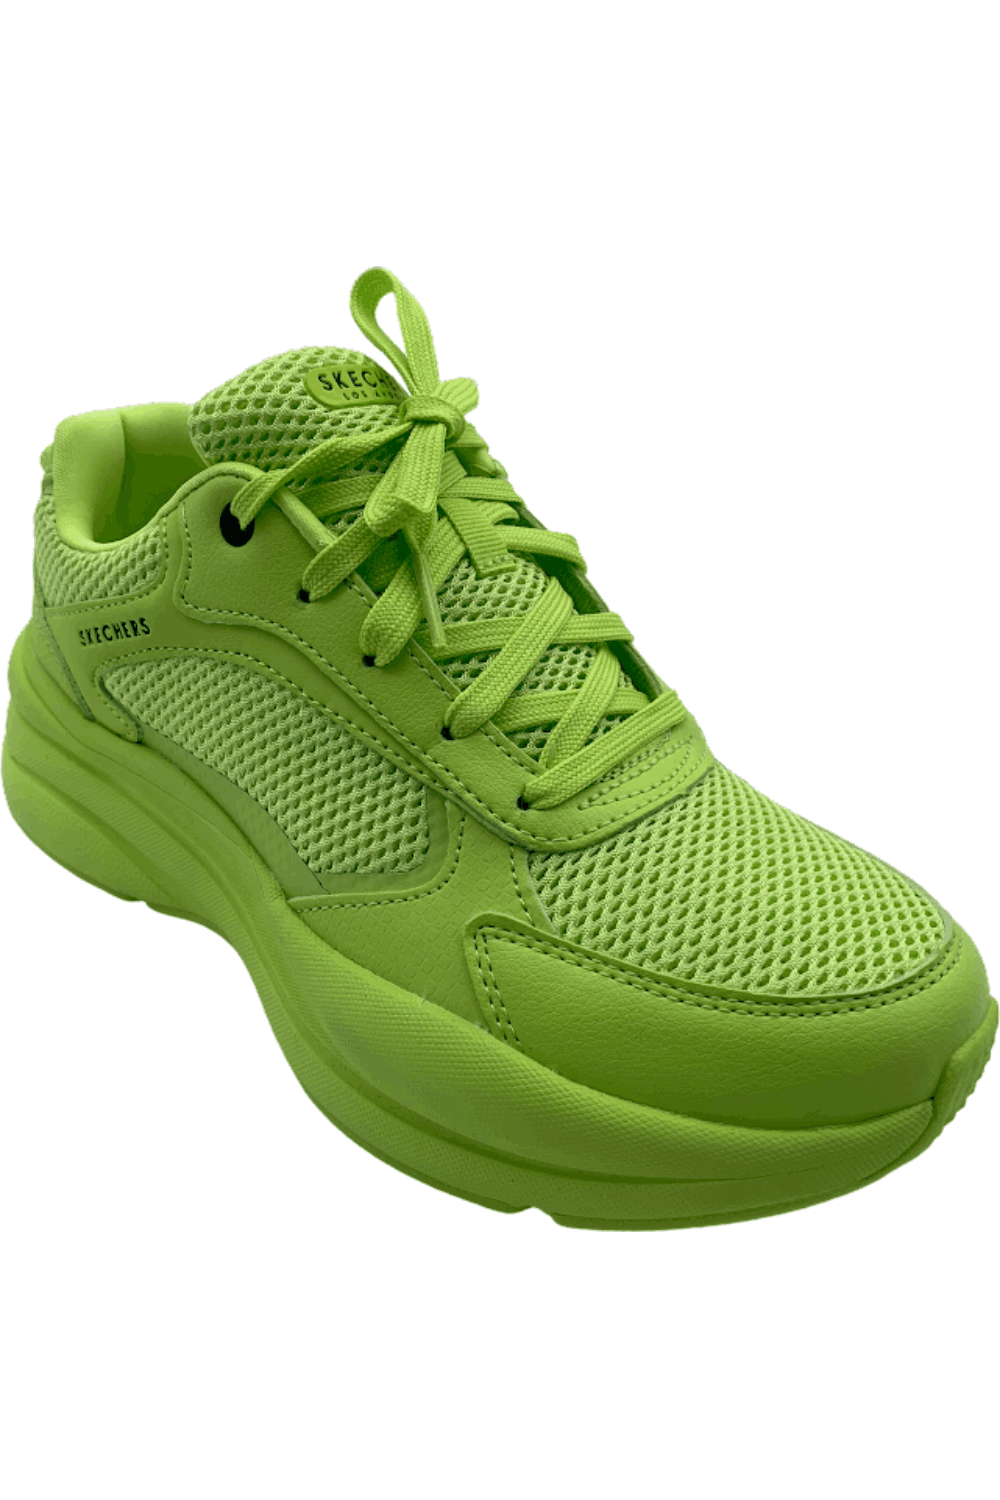 Læring gips fotoelektrisk Skechers Street Twisterz Casual Lace-Up Sneaker Lighten Up Lime/Green |  Jender